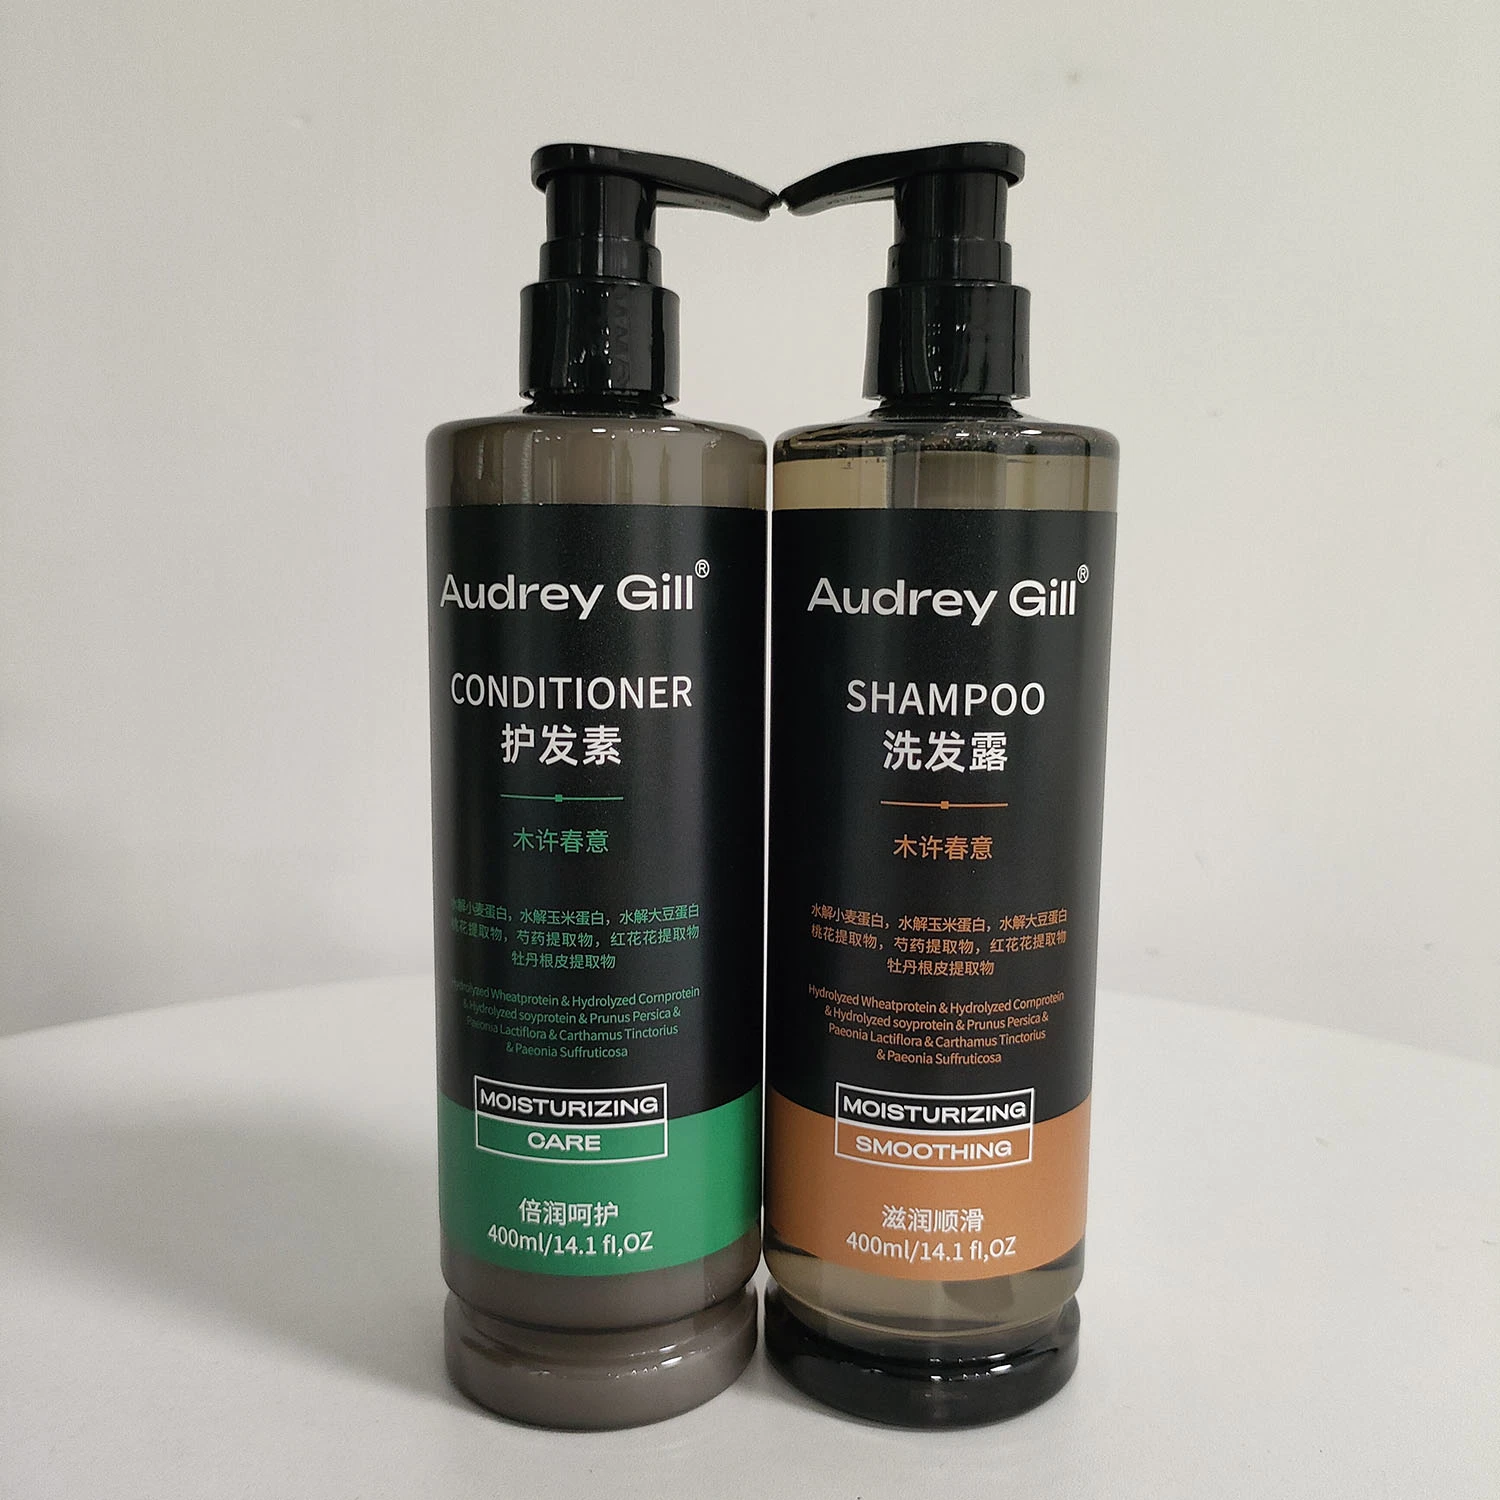 Private Label Skin Care Cosmetics Shampoo Shower Gel Bath Hotel Products